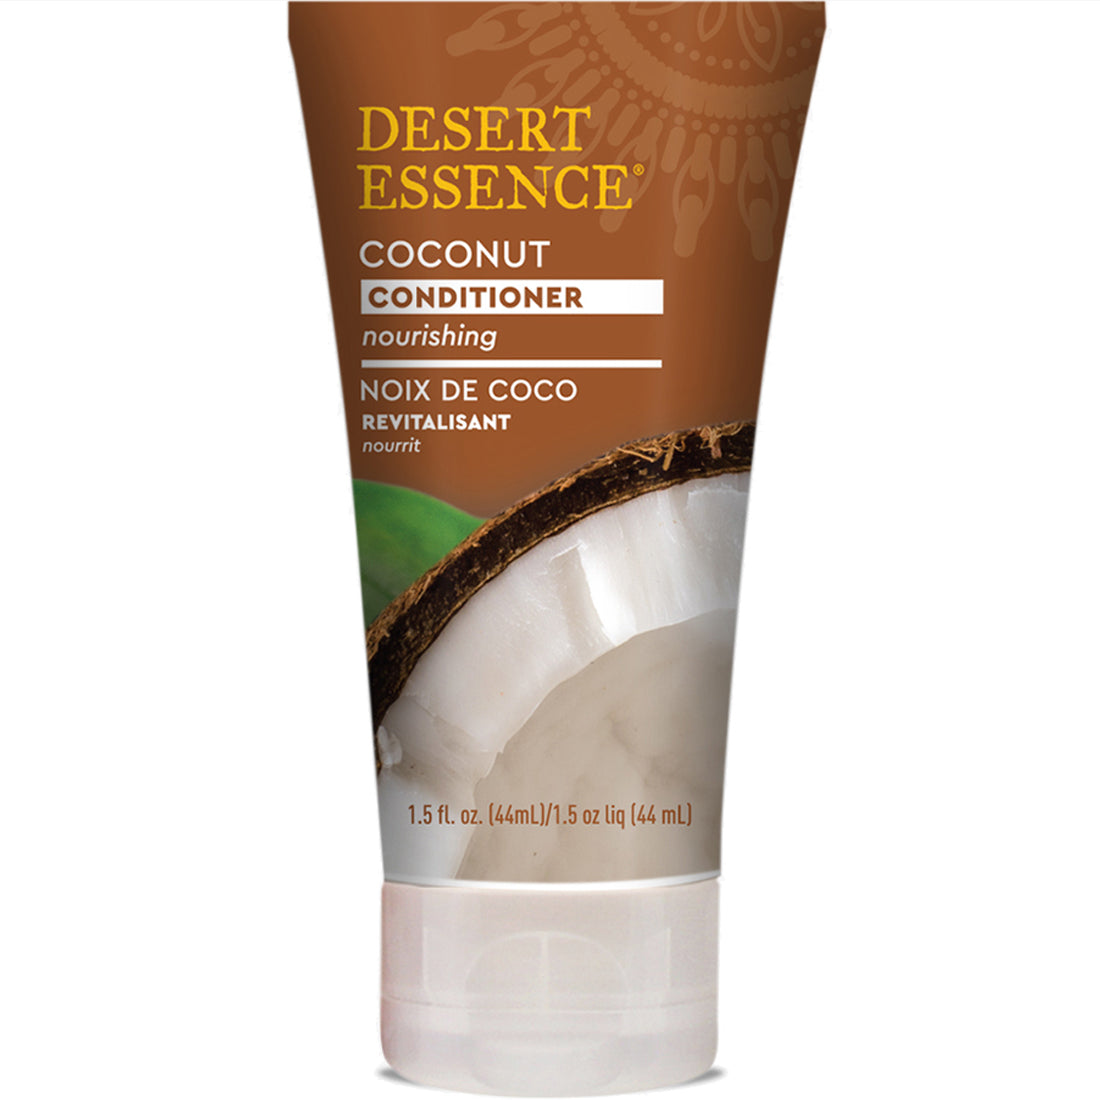 Desert Essence Coconut Conditioner Travel Size, 44ml